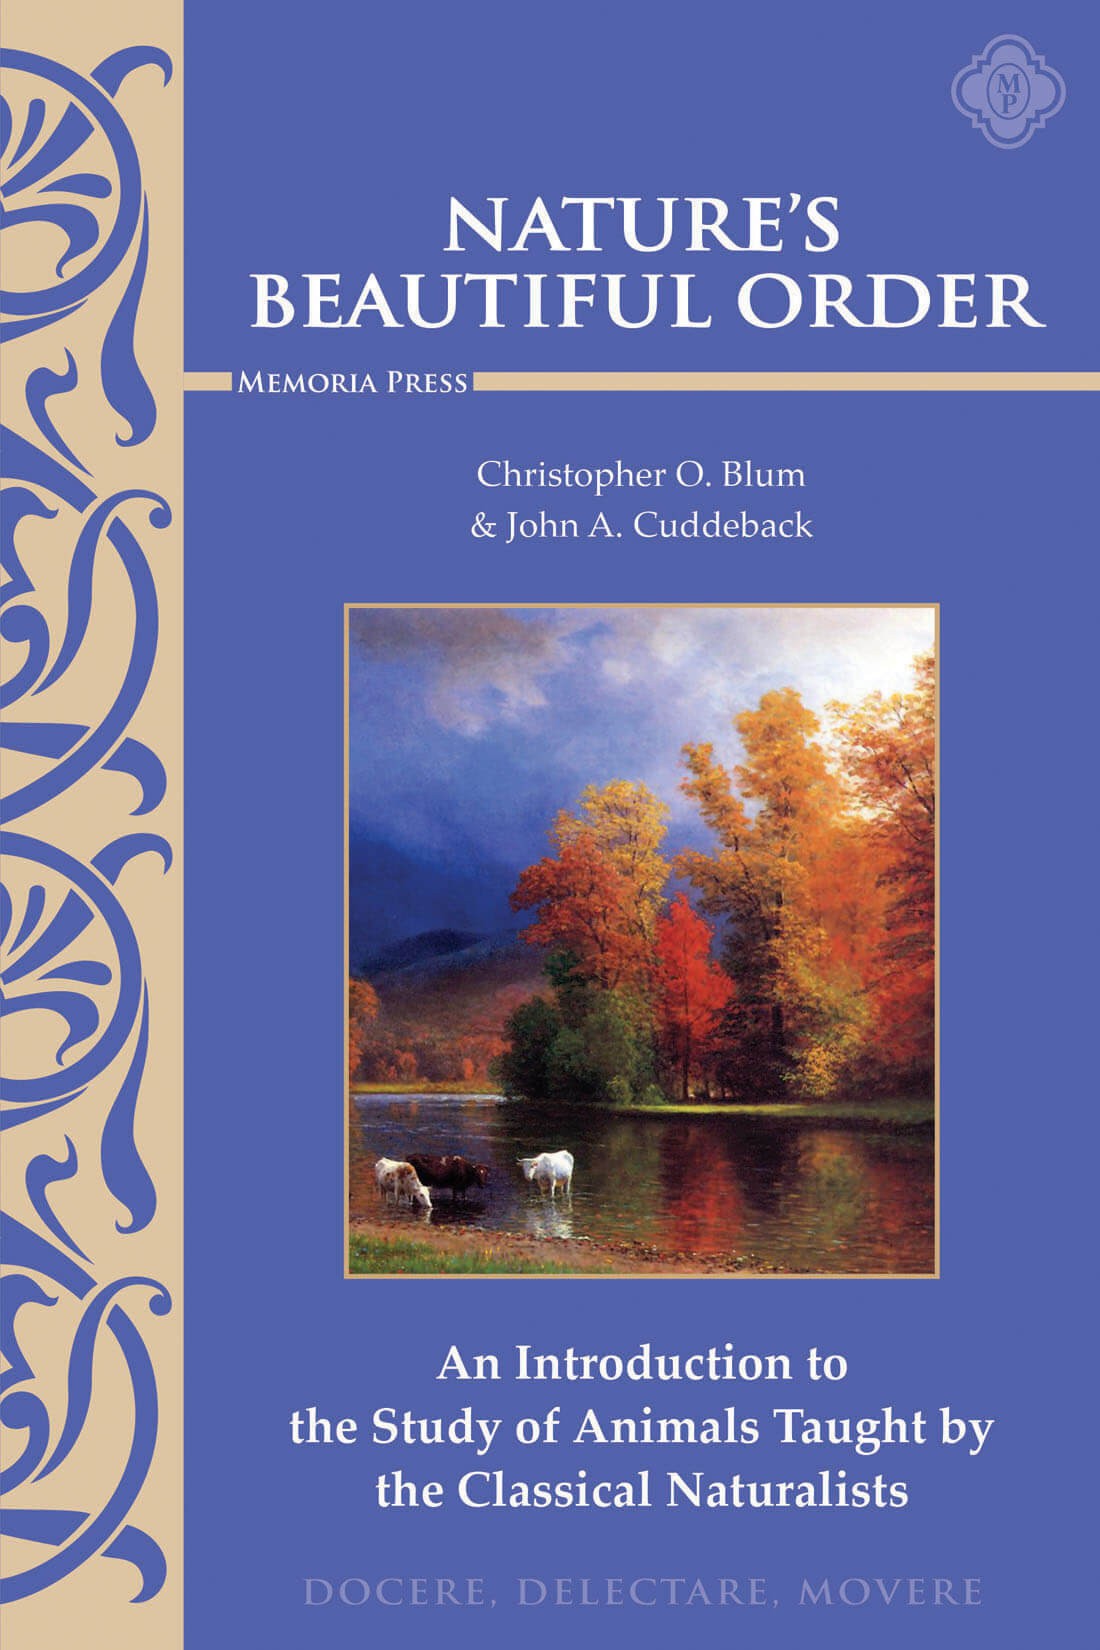 Nature’s Beautiful Order Text - Memoria Press